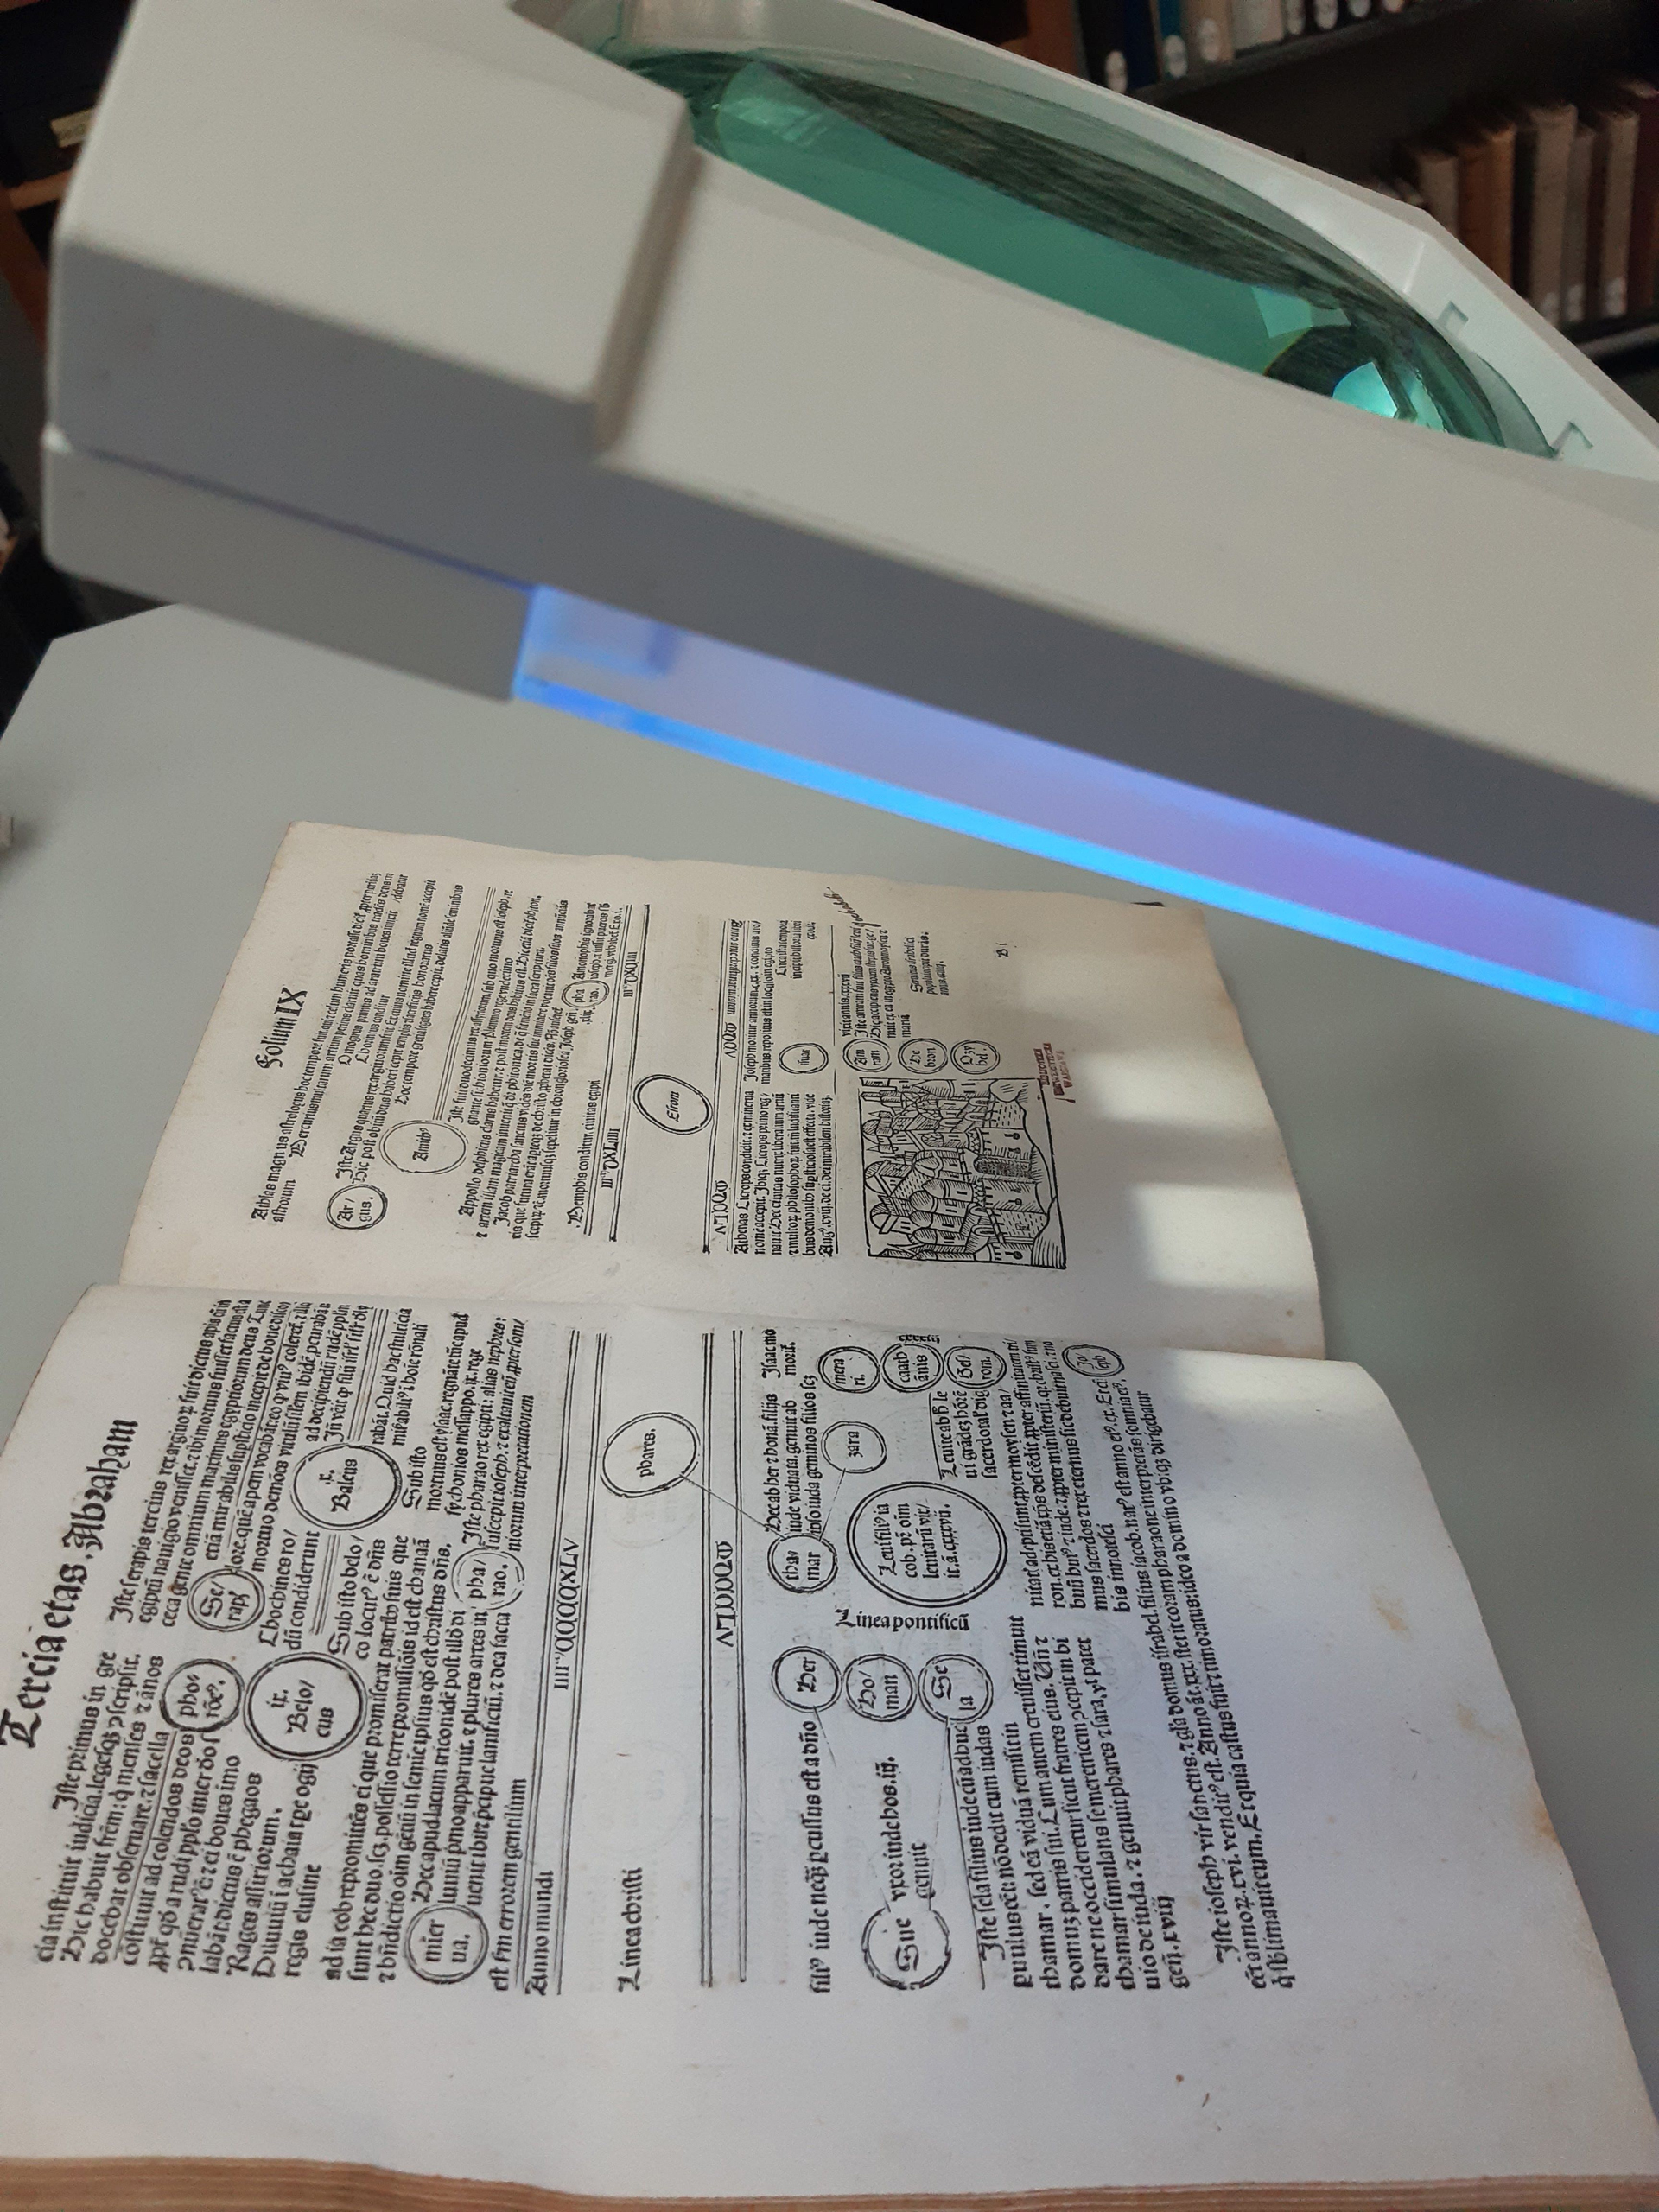 Stary druk leżący pod lampą UV.